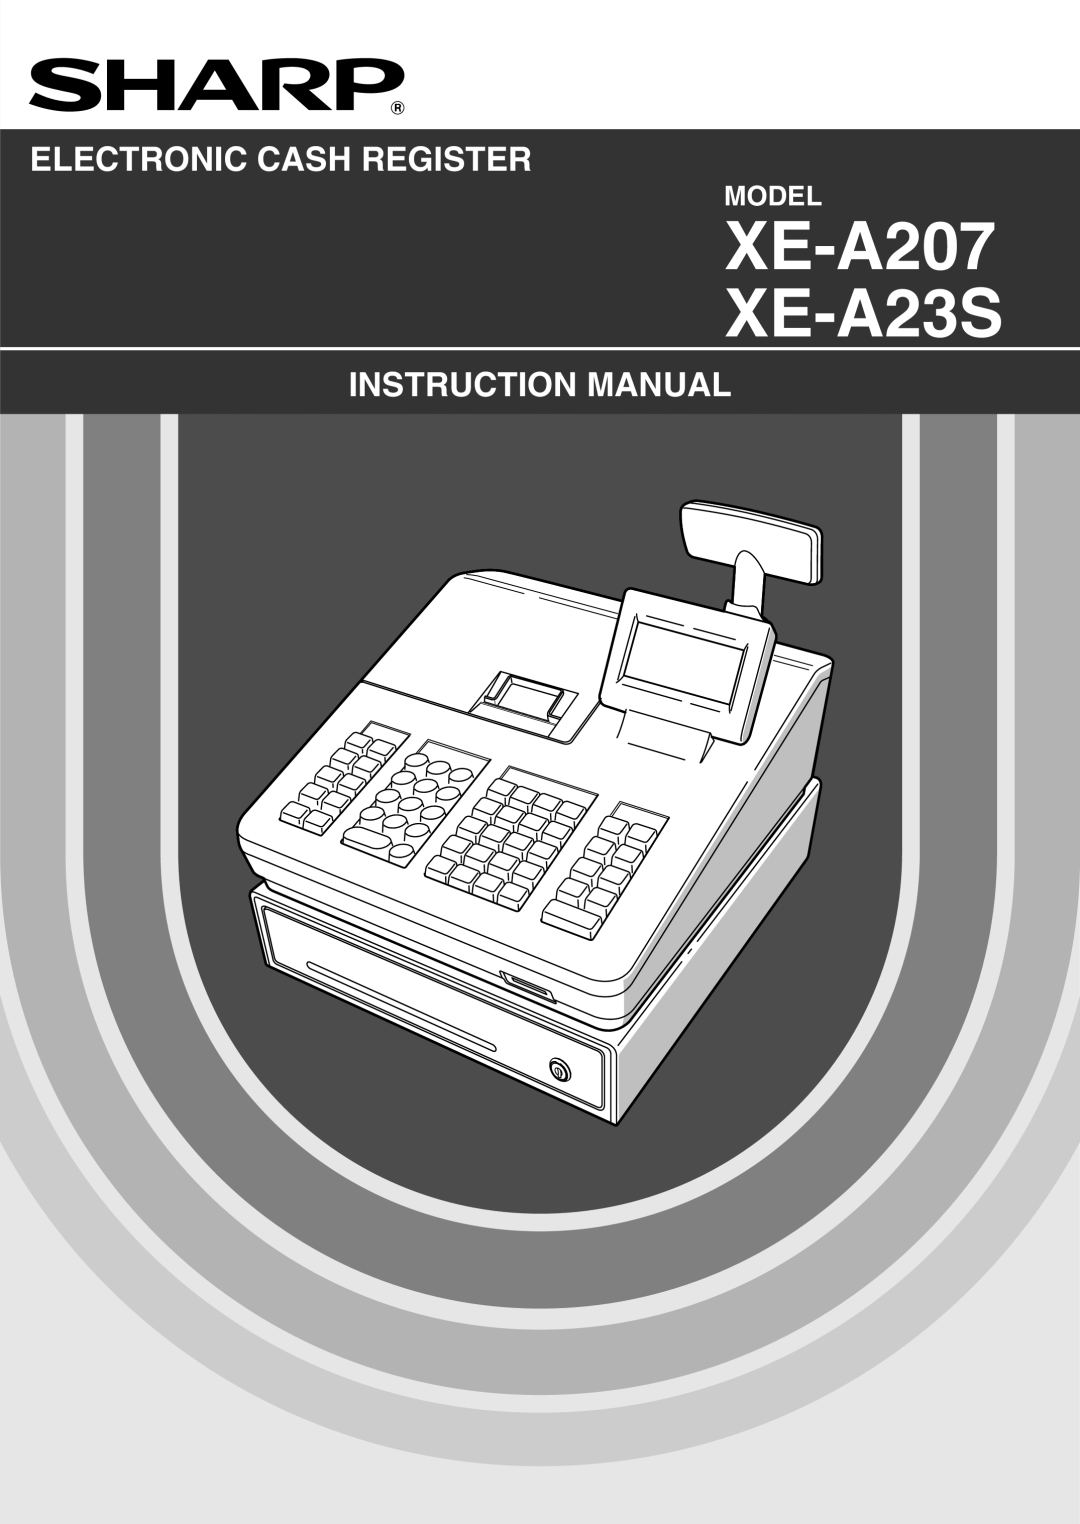 Sharp electonic cash register instruction manual XE-A207 XE-A23S, Electronic Cash Register, Instruction Manual, Model 